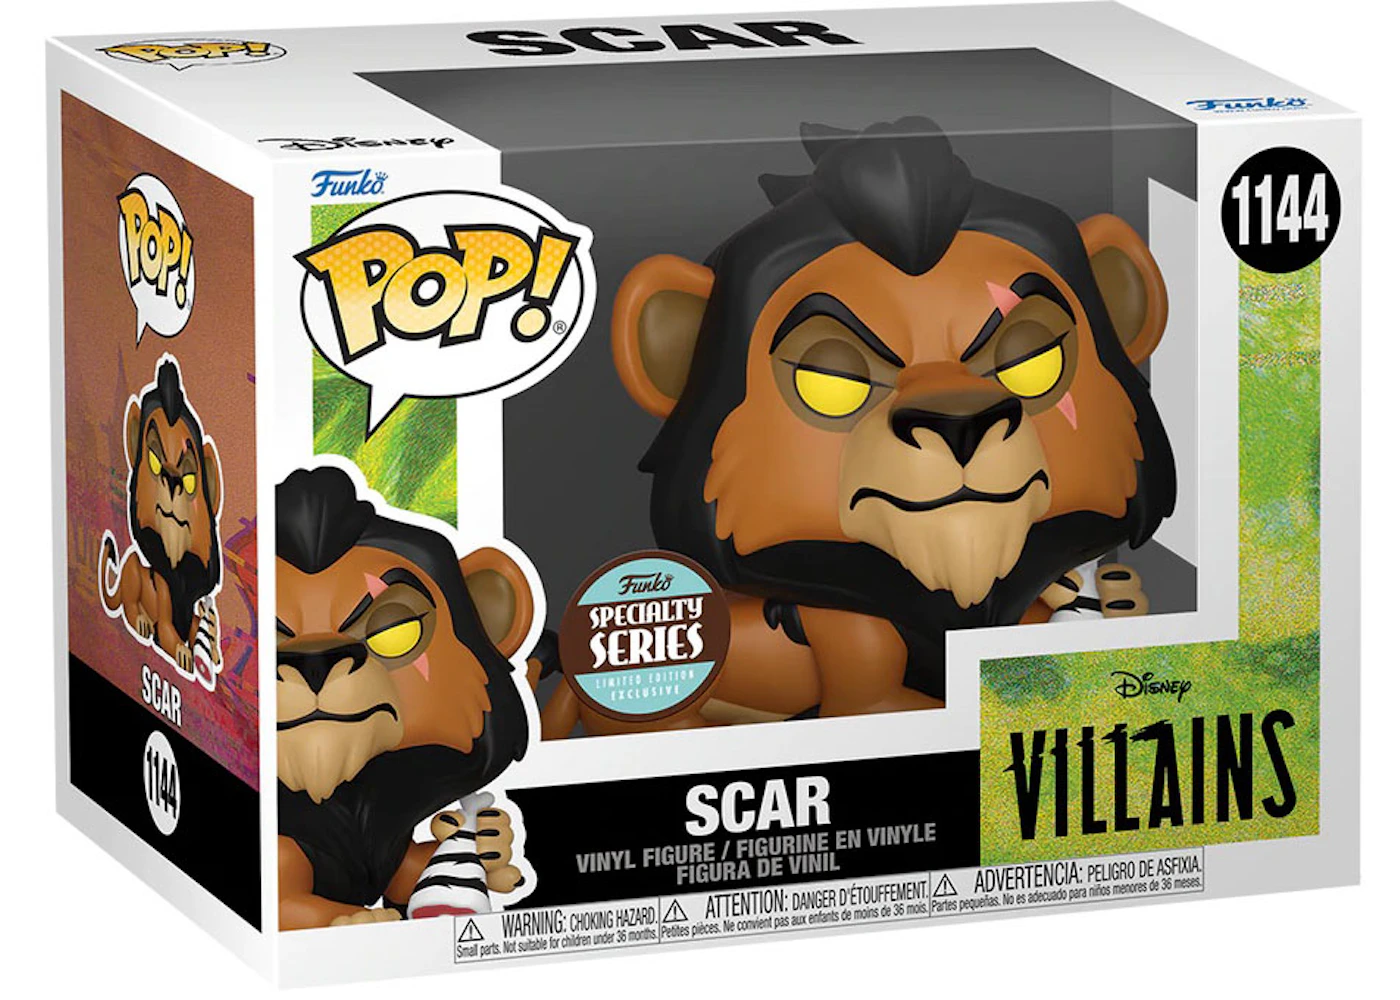 Funko Pop! Disney Villains The King Scar Specialty Series Exclusive Figure #1144 - JP